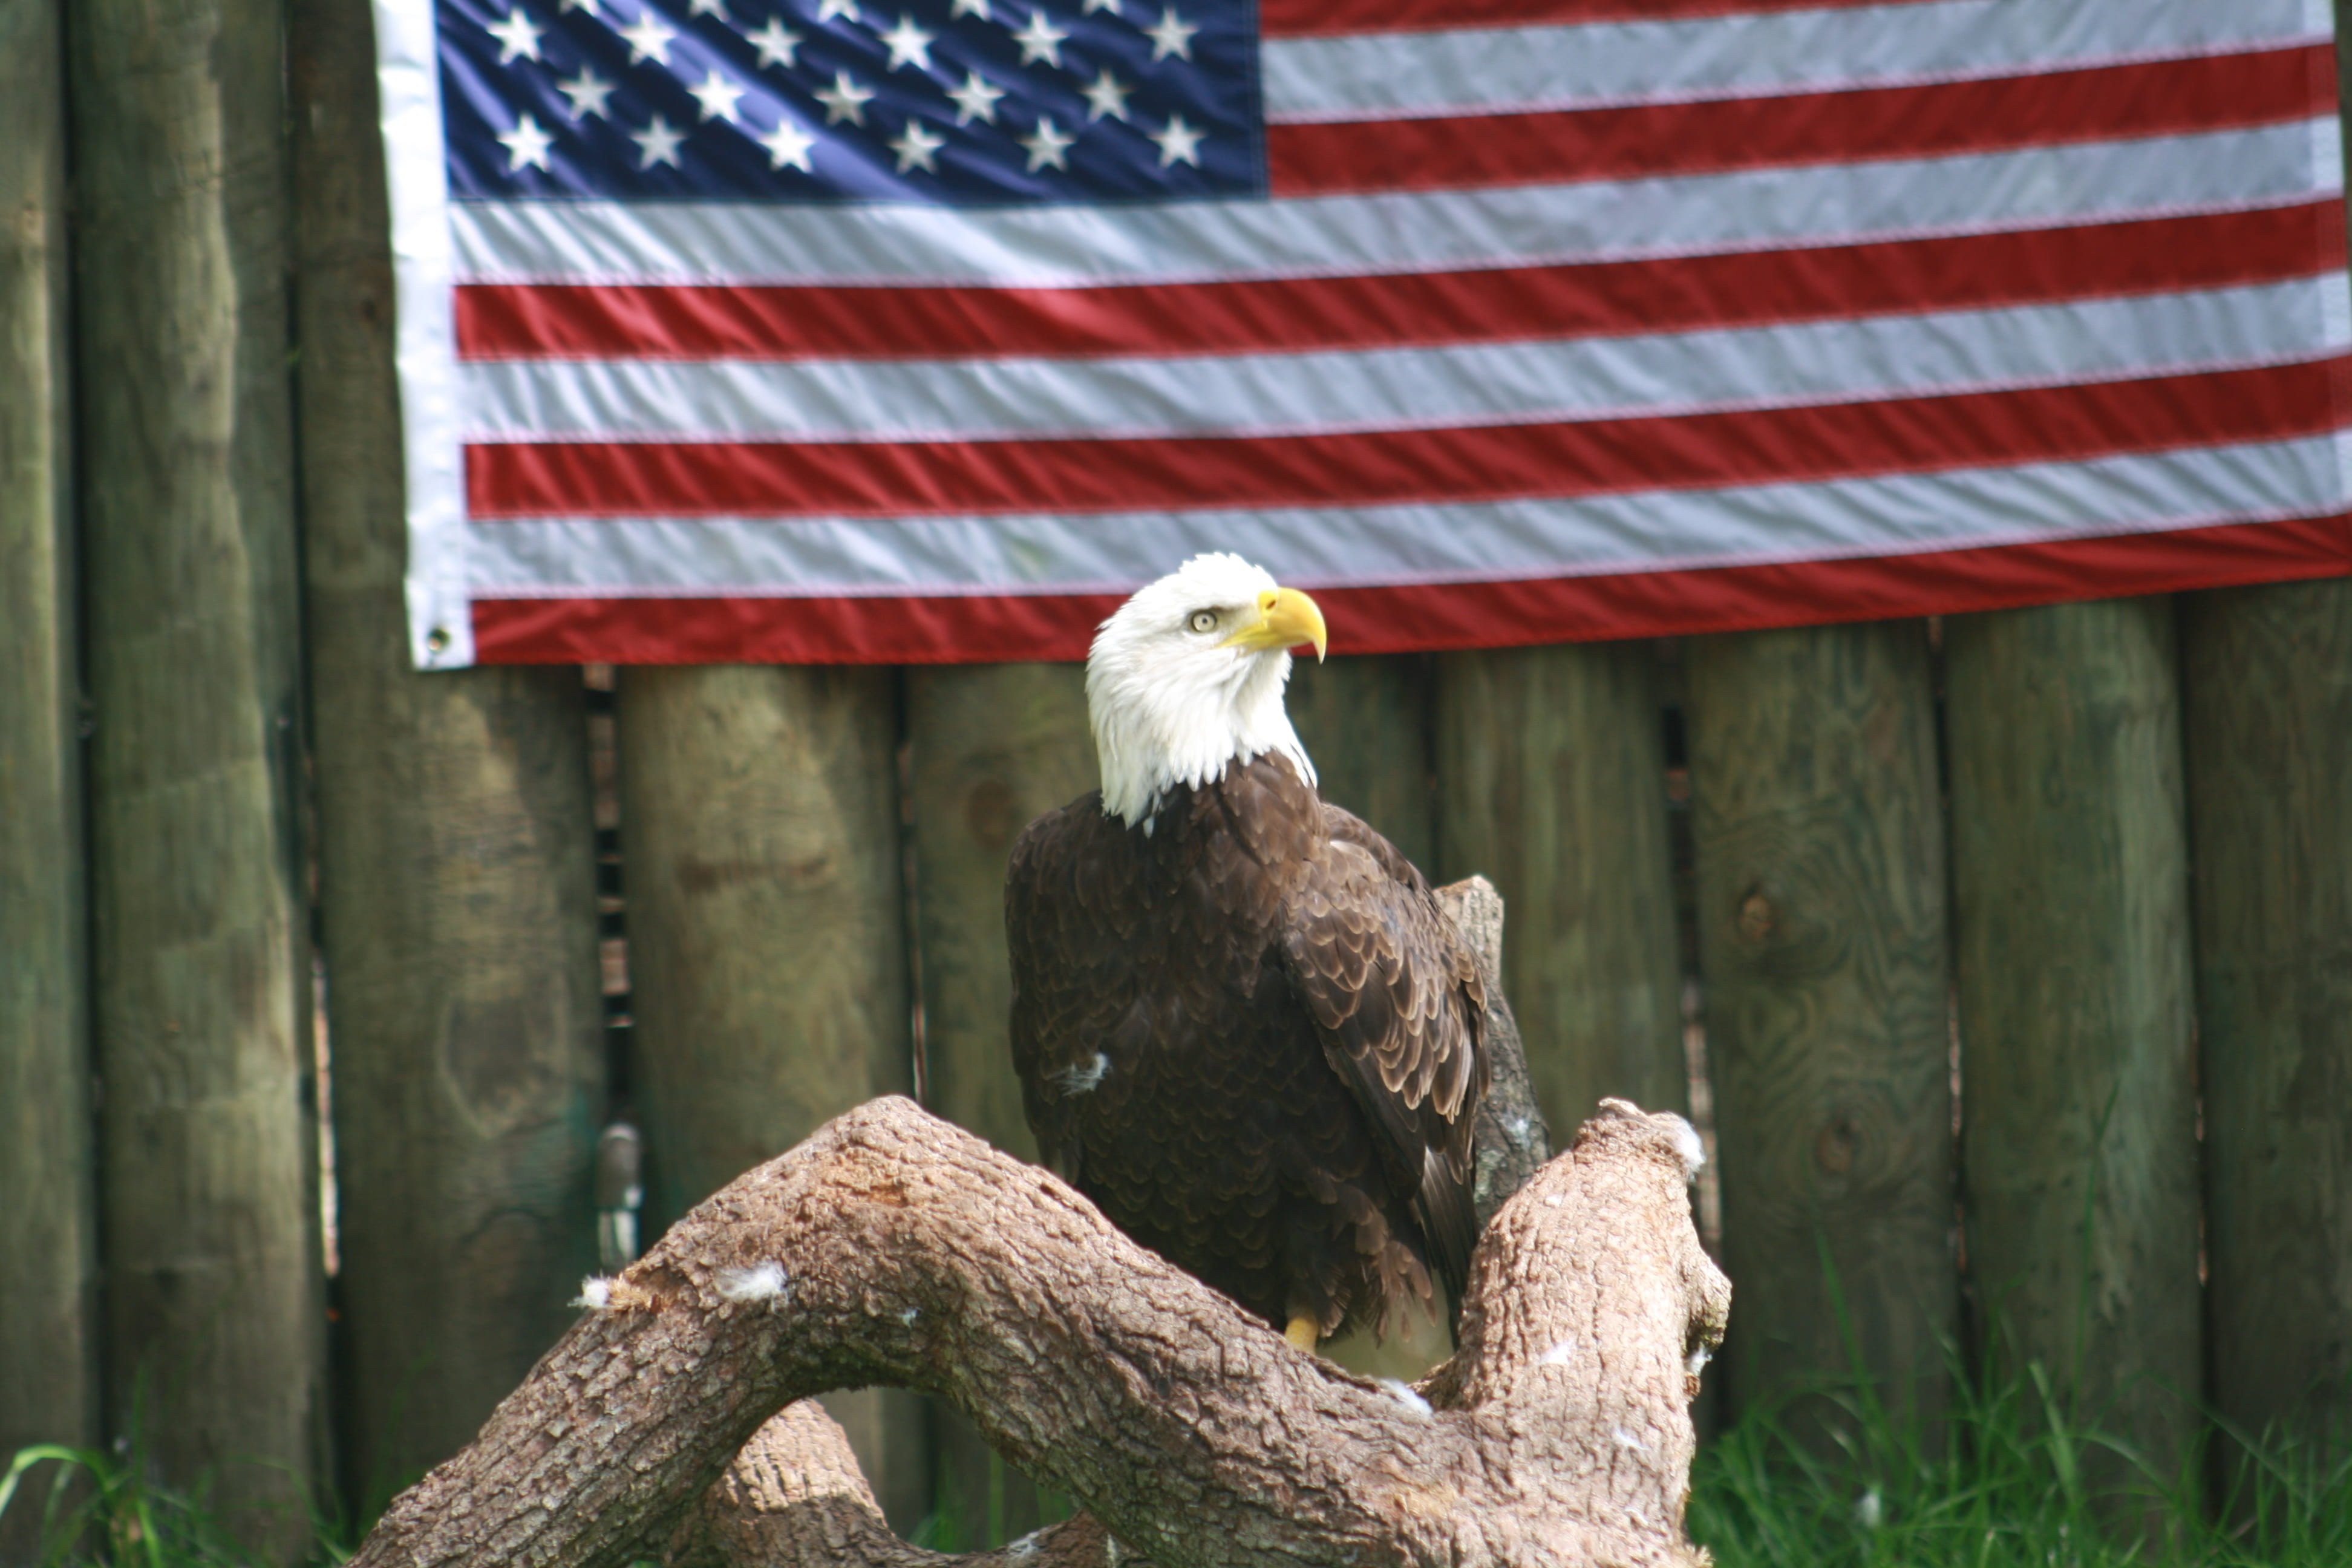 America is beautiful. Белоголовый Орлан США. Символ Америки белоголовый Орлан. Белоголовый орёл символ Америки. Белоголовый Орлан на флаге США.